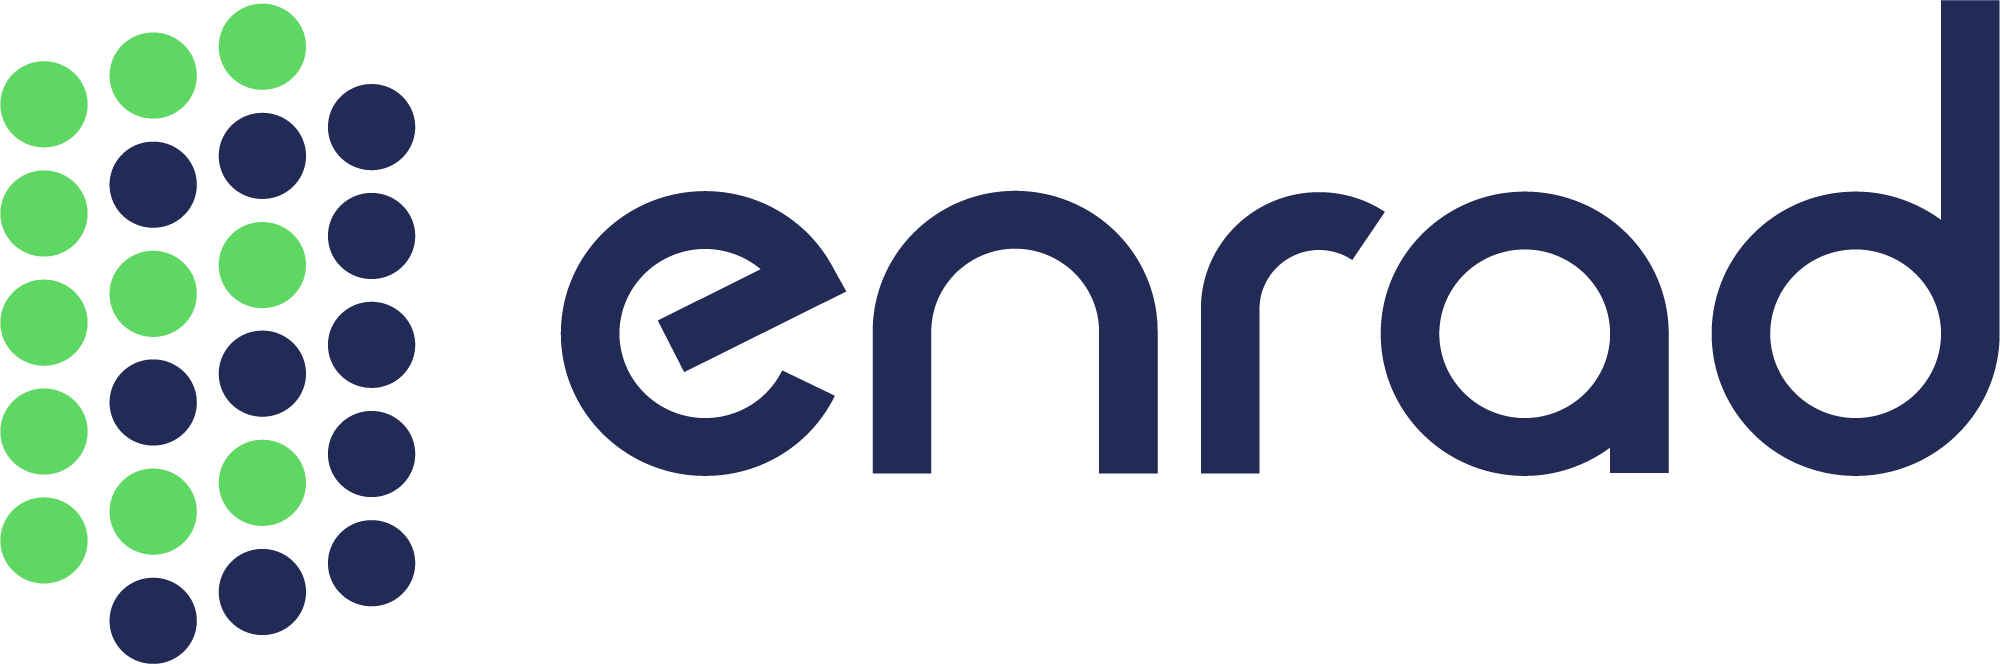 Enrad AB Logotyp